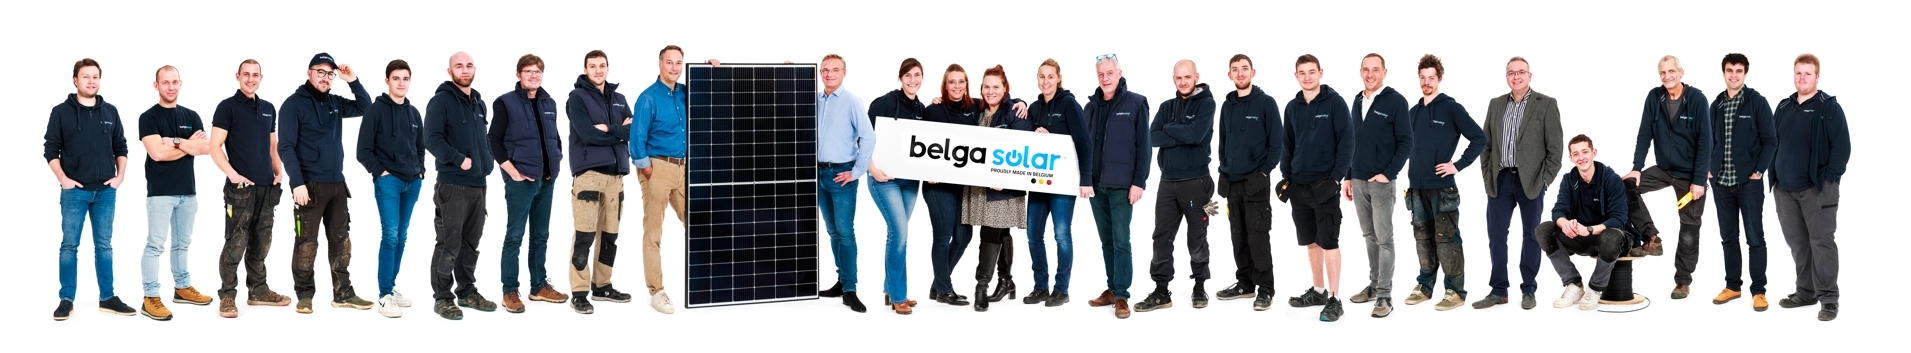 Equipe Belga Solar